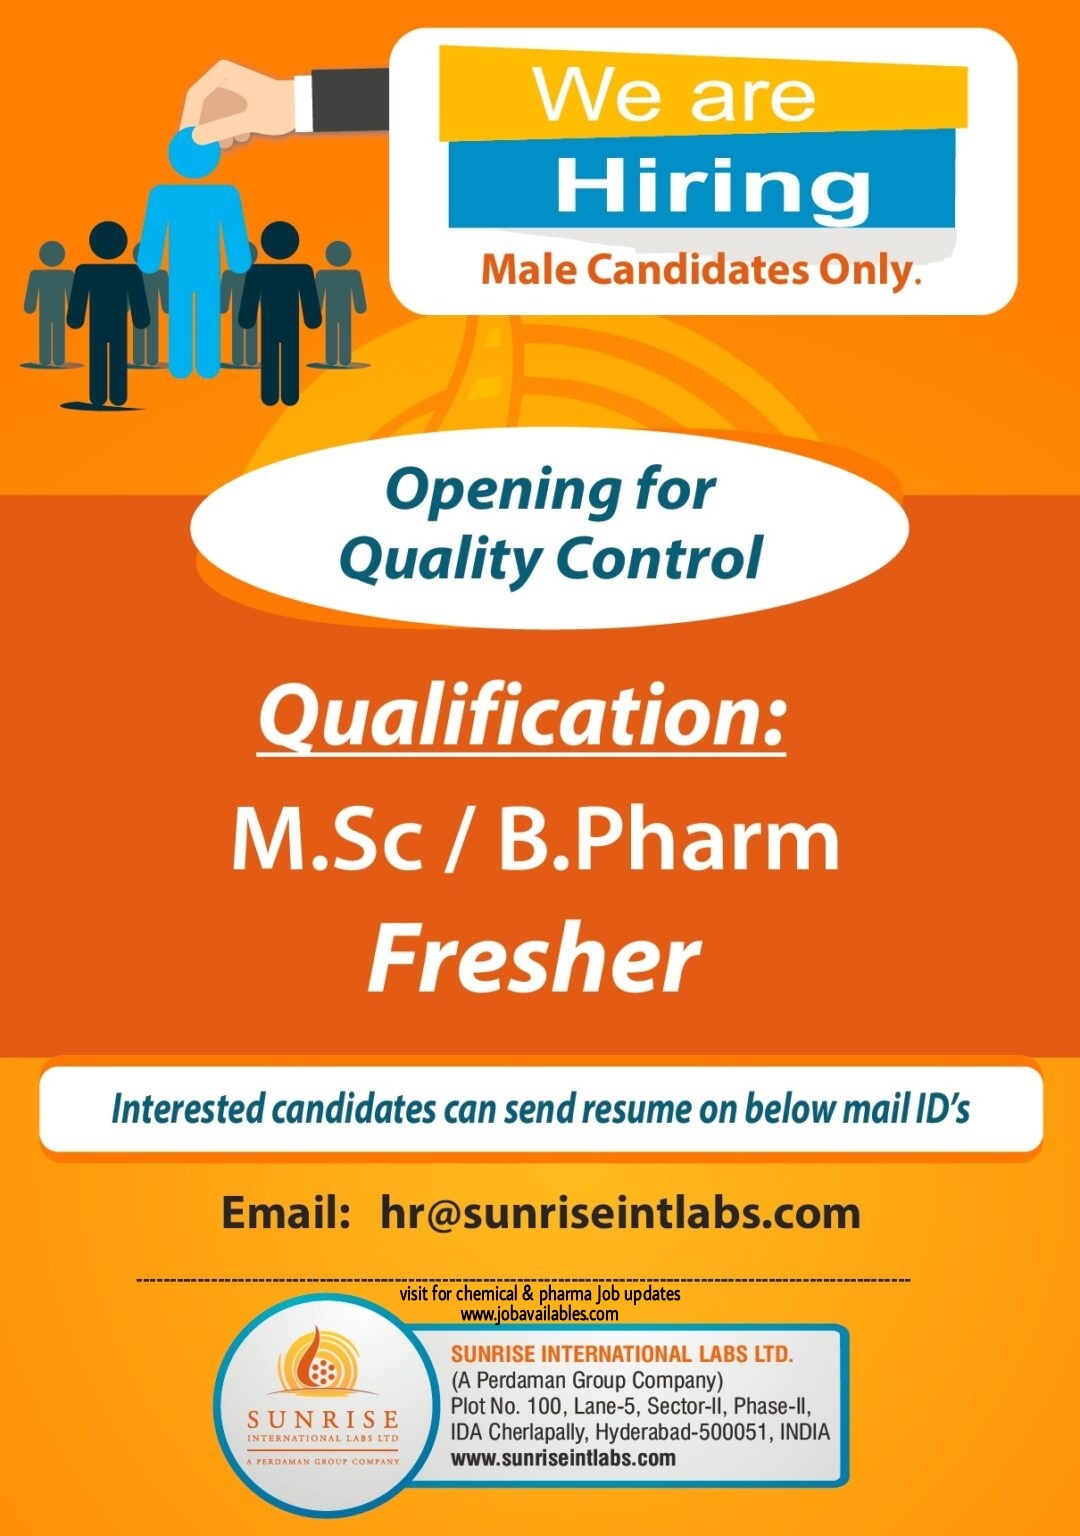 Job Availables, Sunrise International Labs Ltd Job Opening For Freshers Msc/ B.Pharma - Quality Control Dept